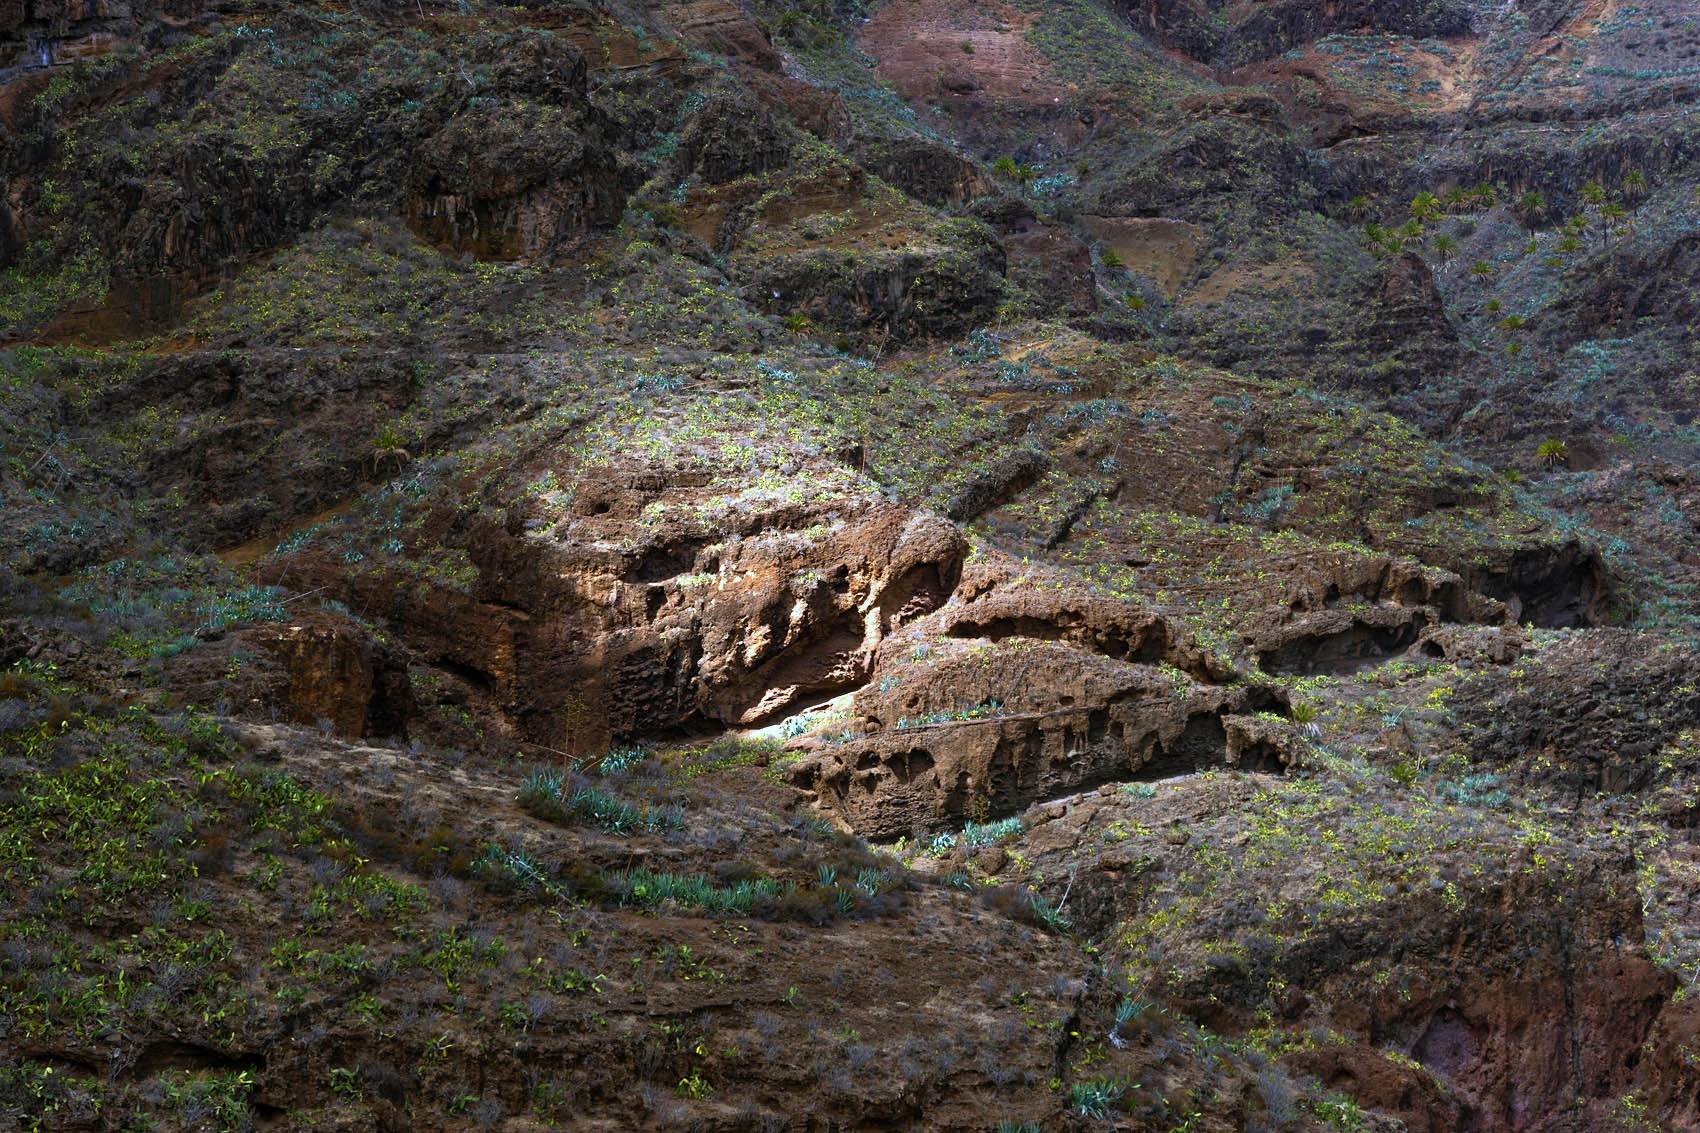 La Gomera Hike #1: The Imada Gorge